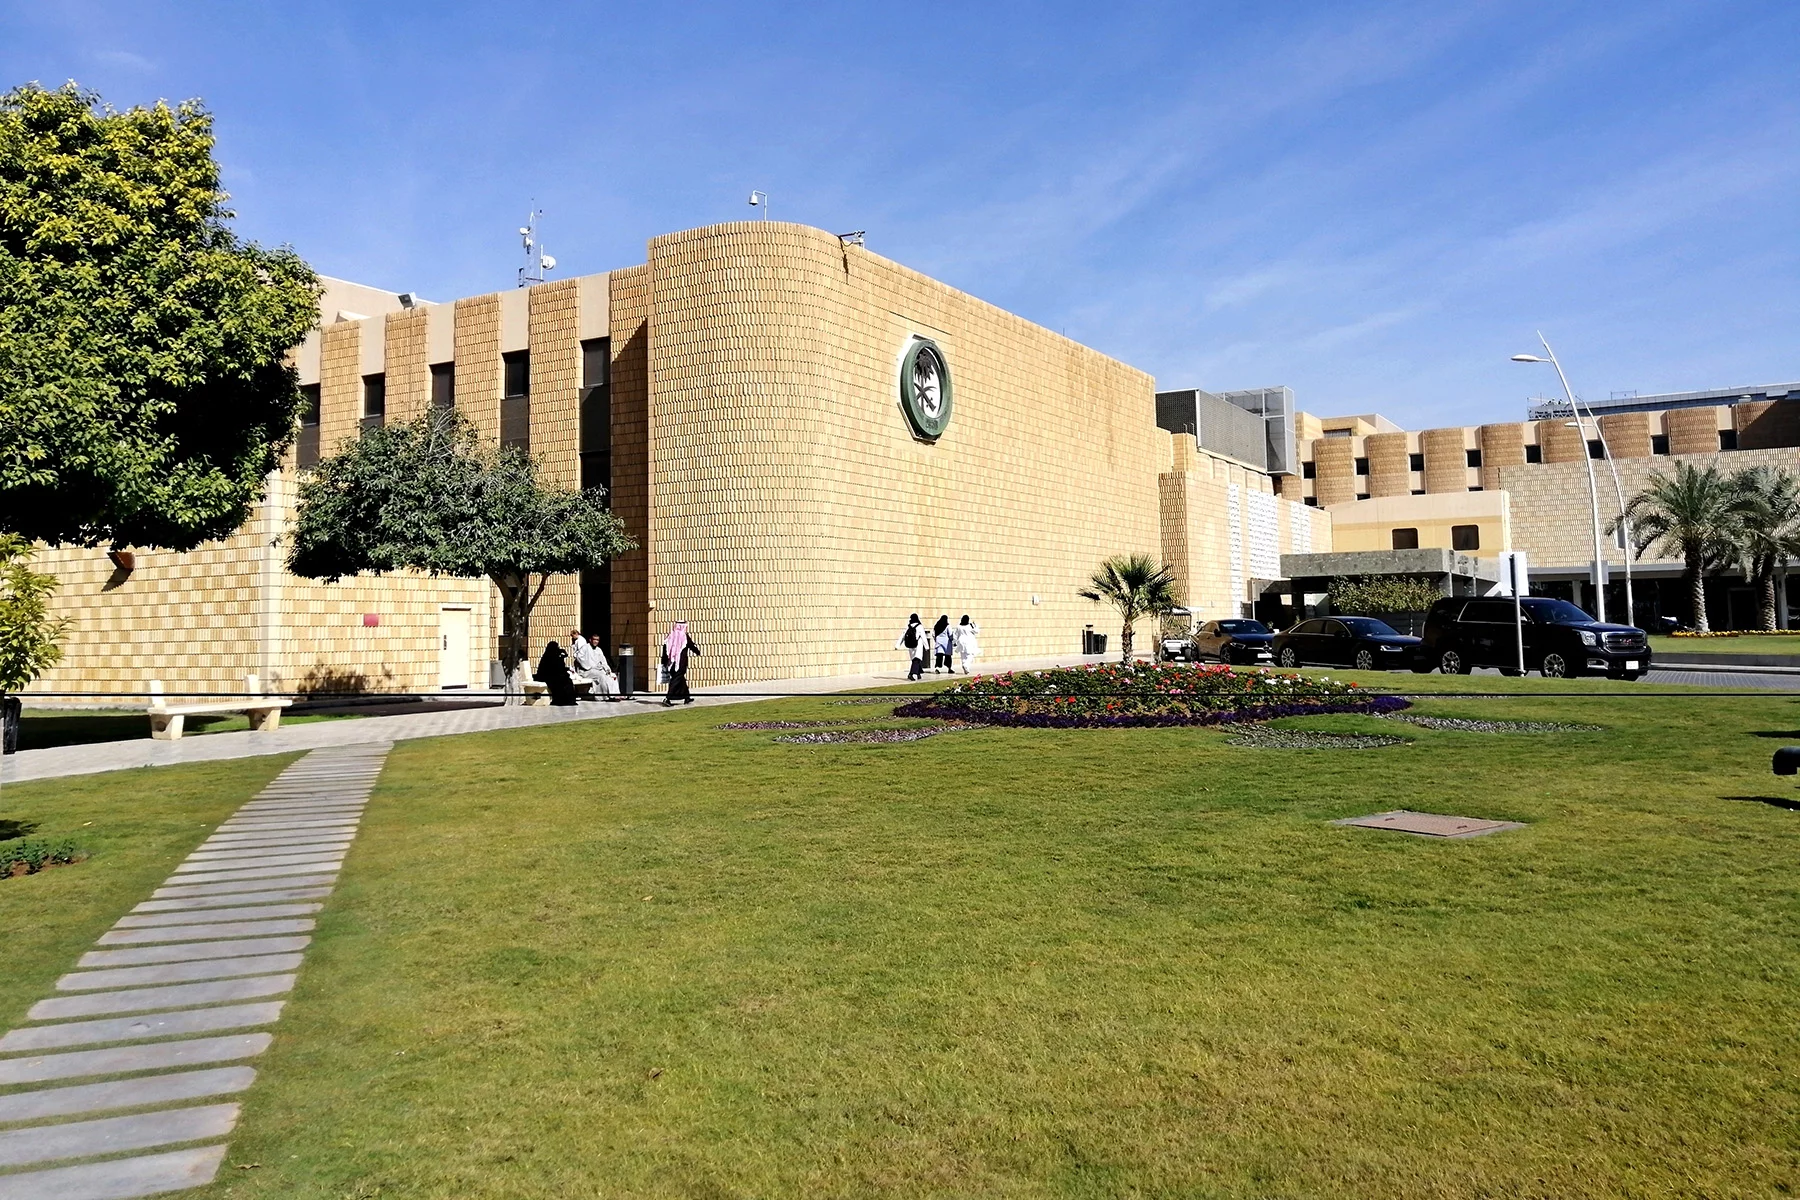 King Faisal Specialist Hospital in Riyadh, Saudi Arabia